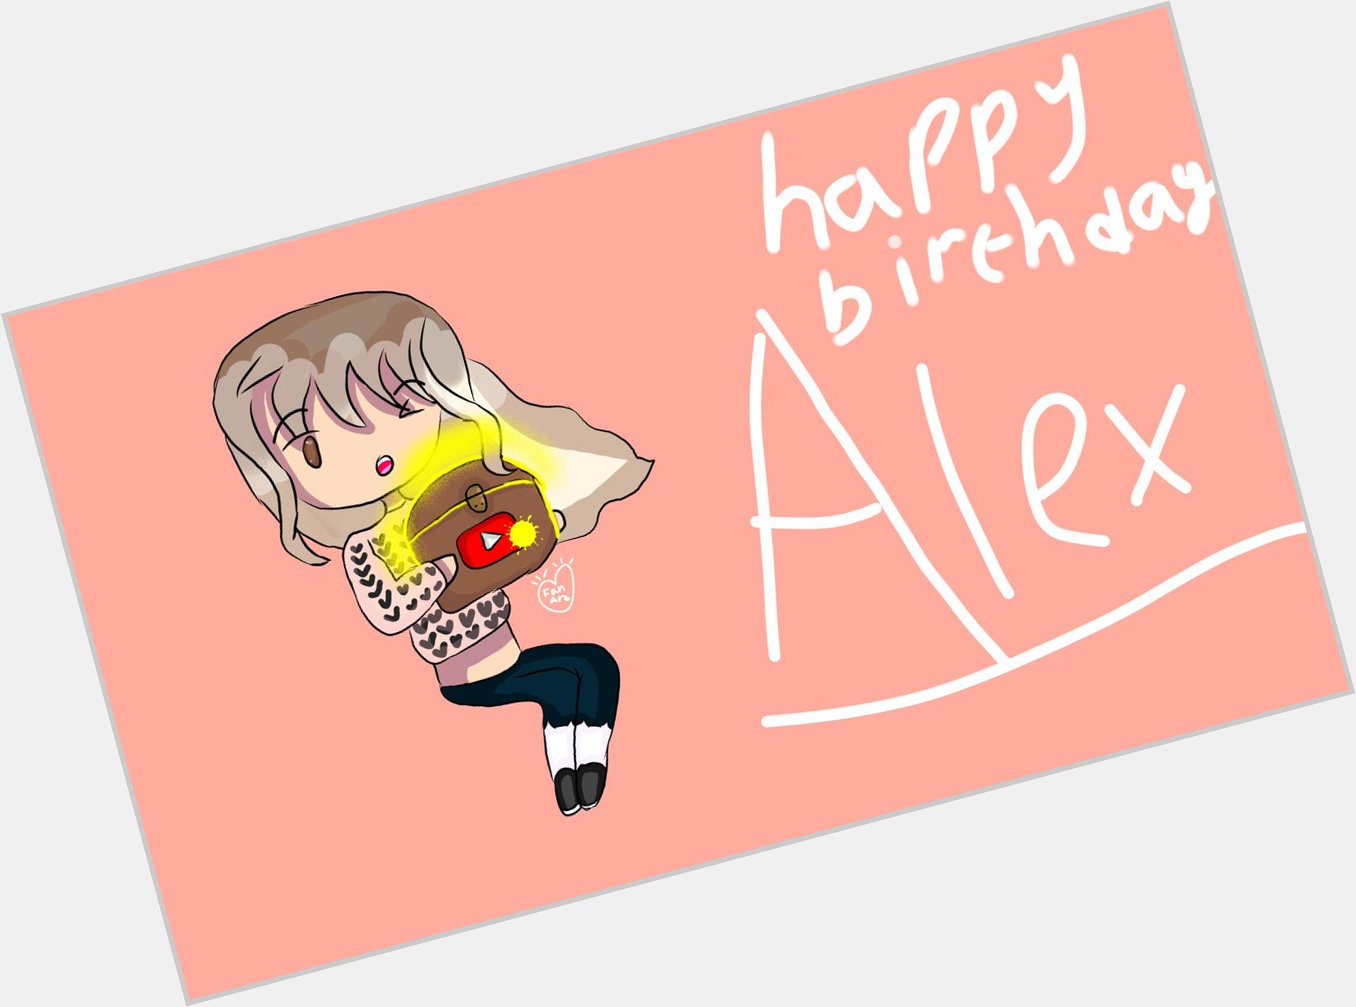 Happy late birthday alex! Love you I wish you the best 